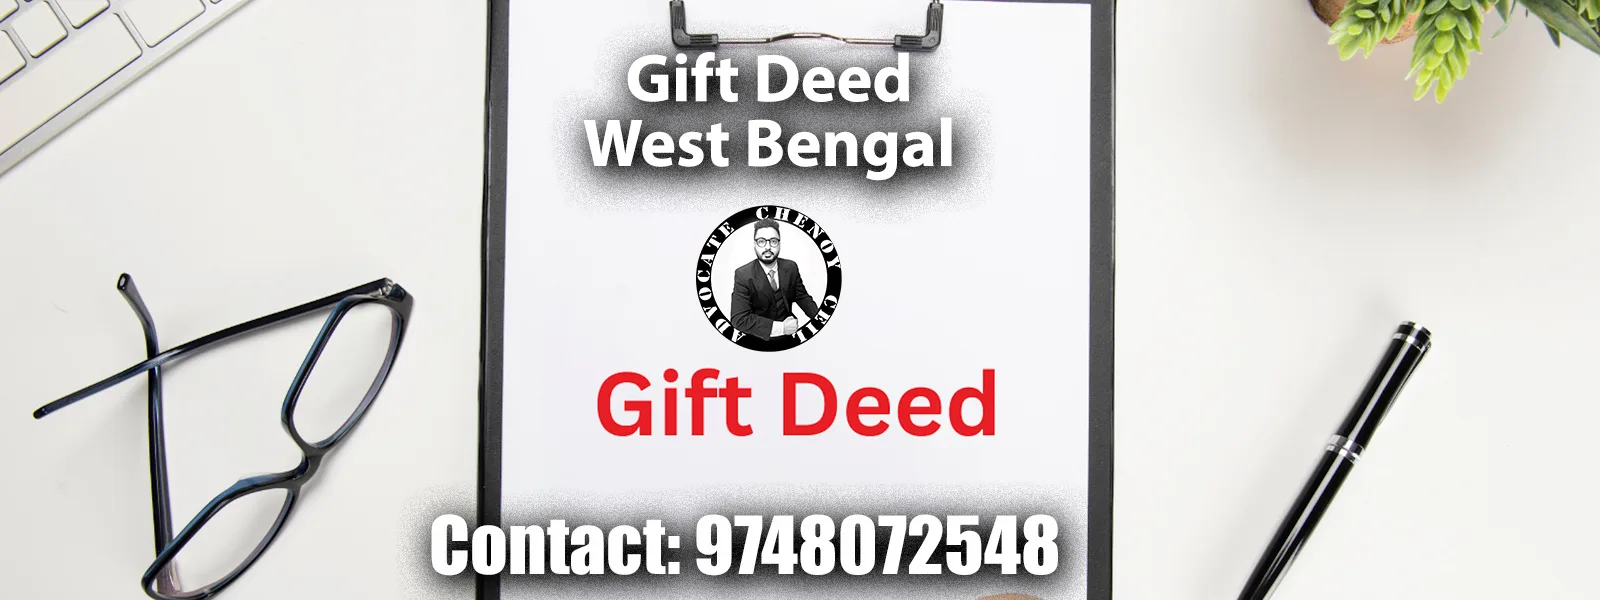 Gift Deed West Bengal